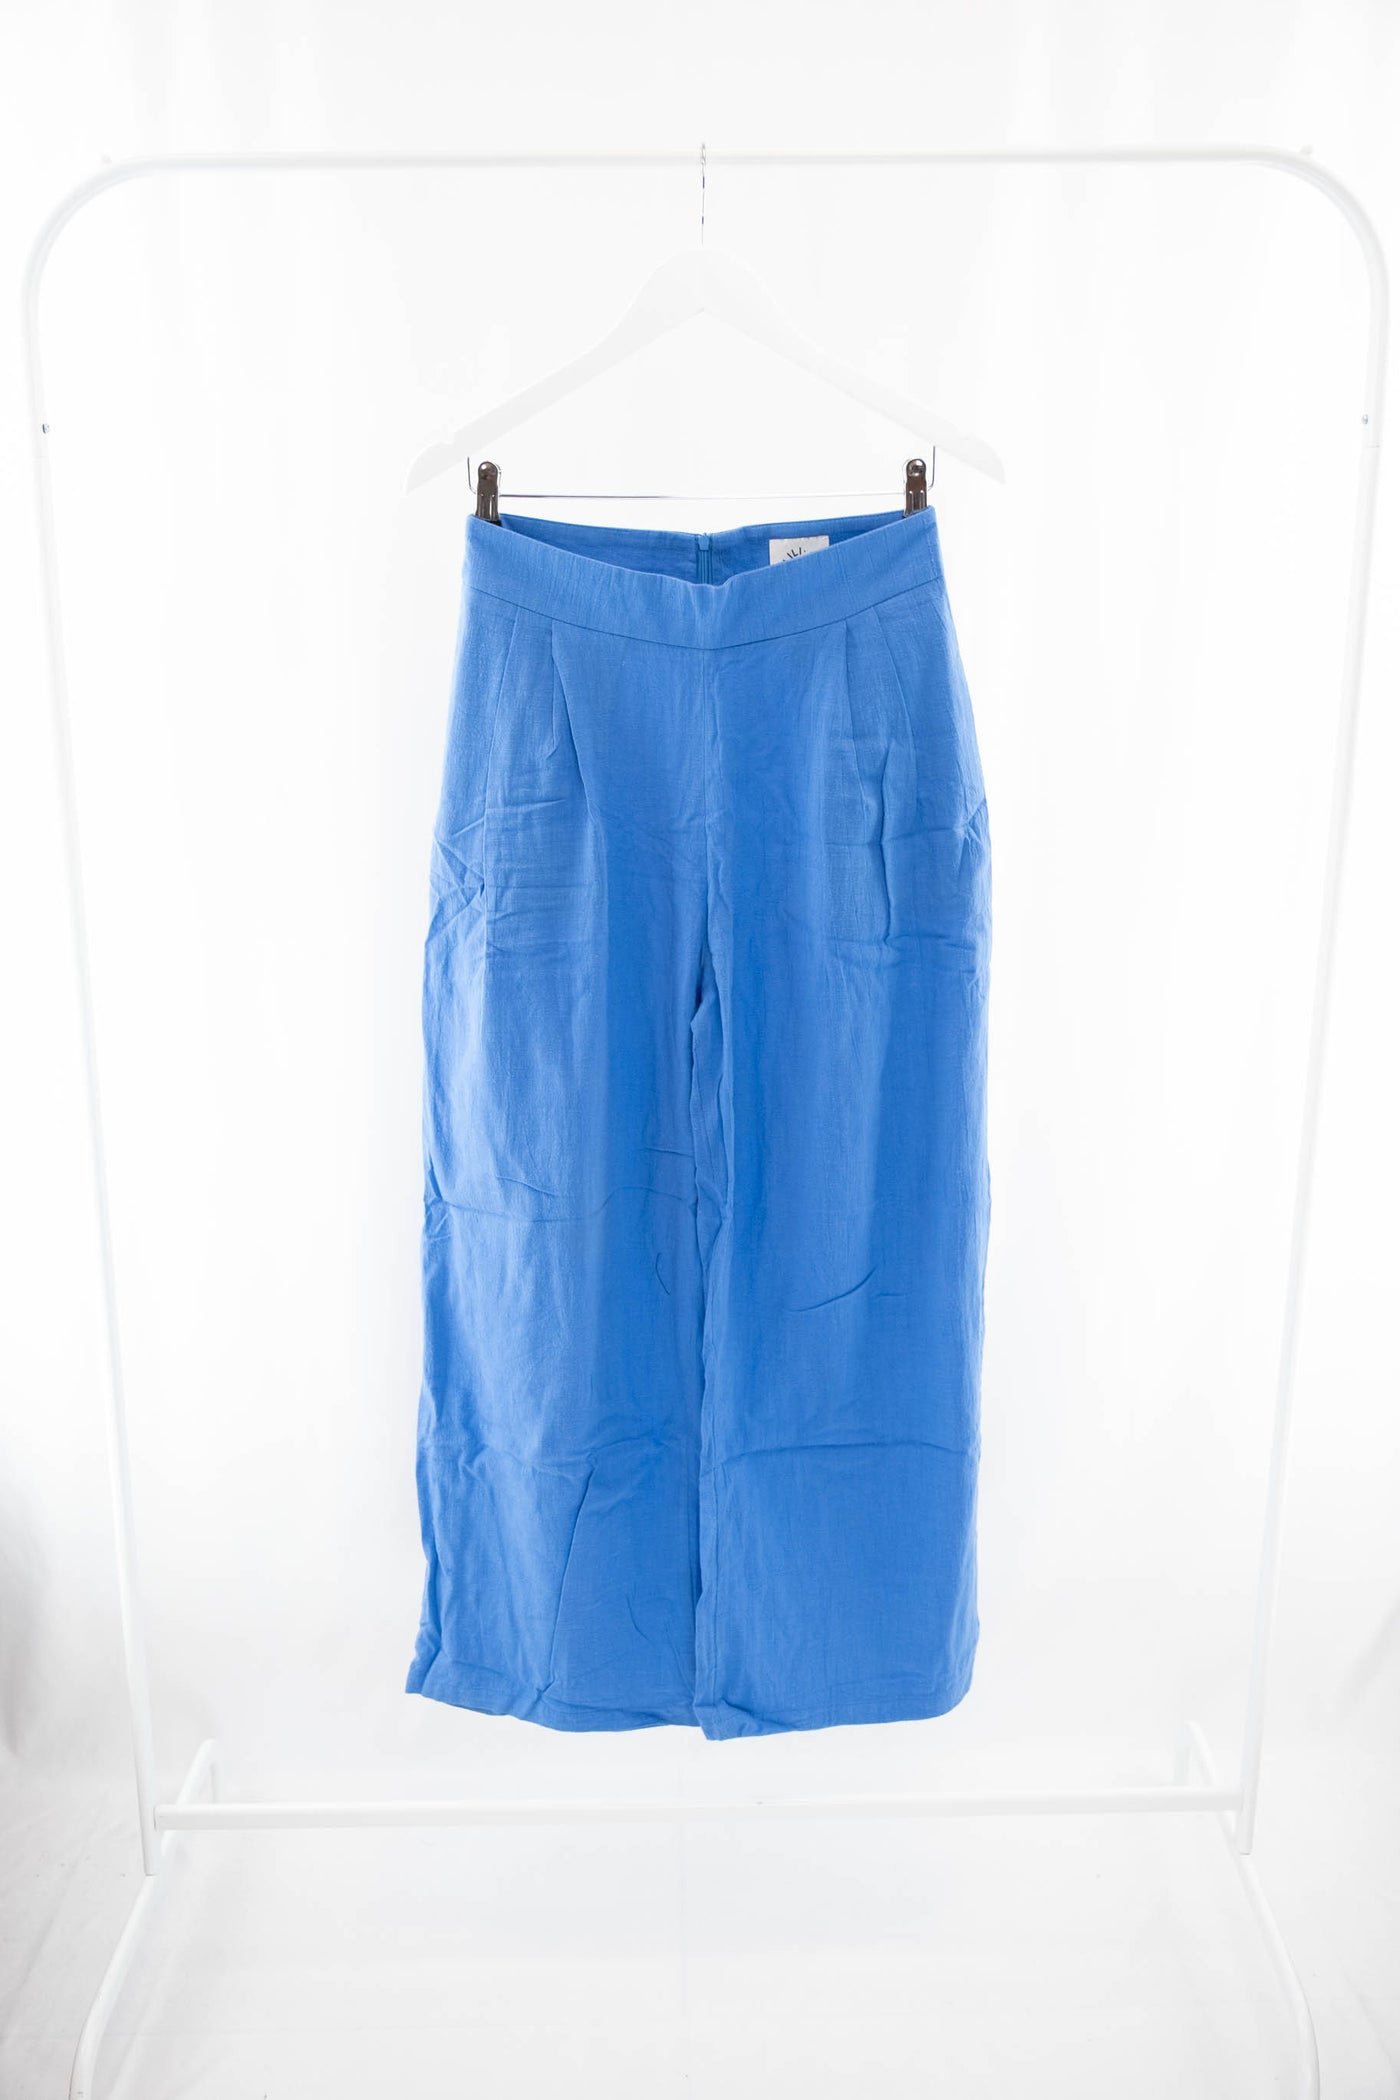 Pantalón algodón azul